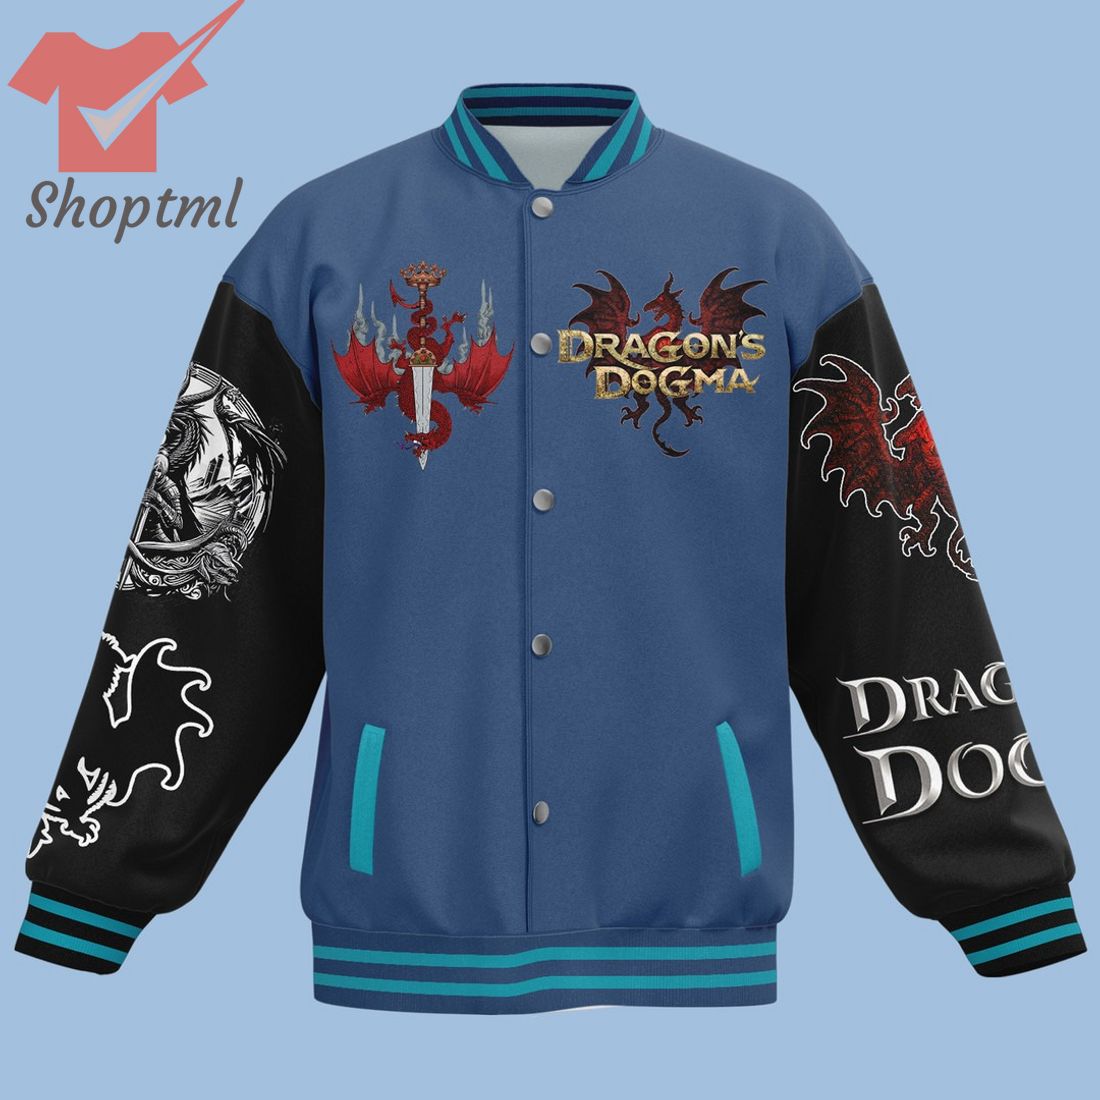 Dragon?s Dogma tis a riftstone Baseball Jacket